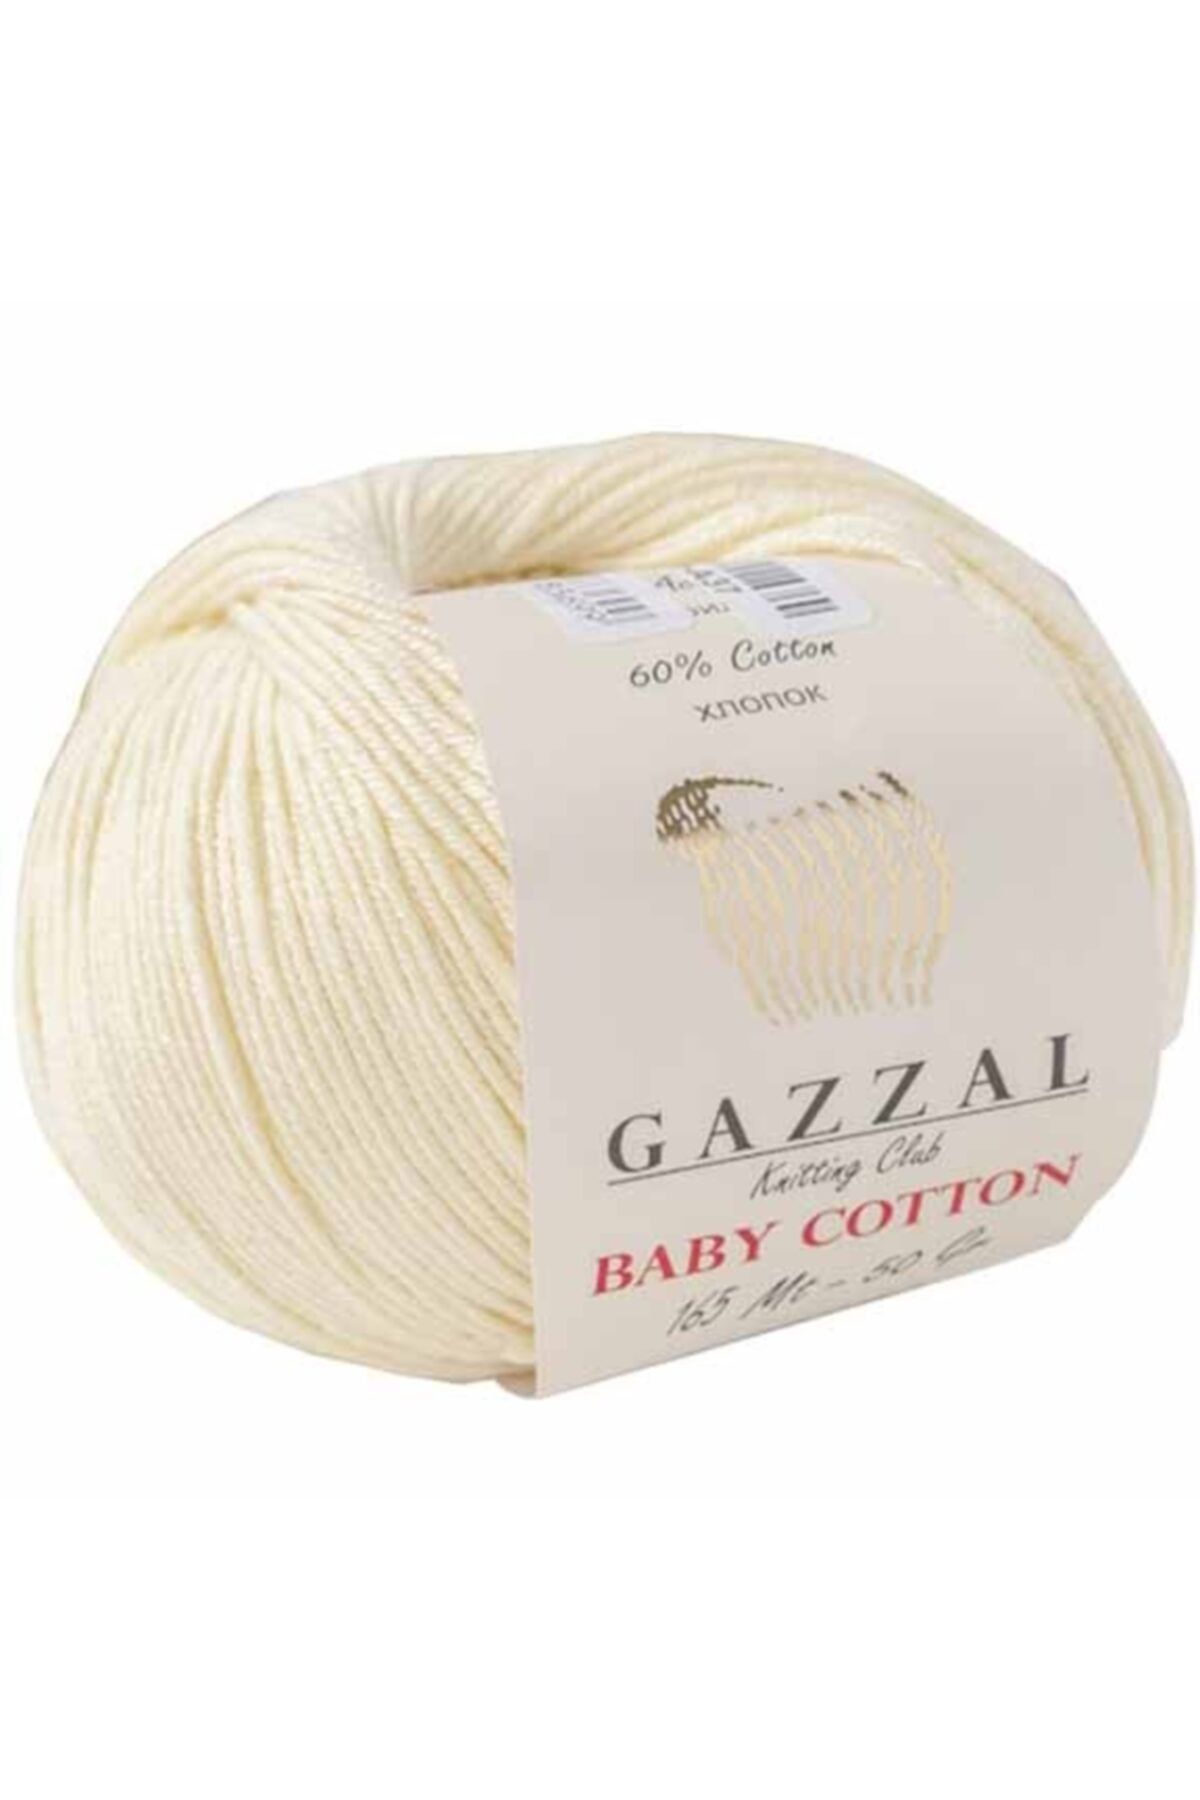 Gazzal Baby Cotton Örgü Ipi 3437 Krem